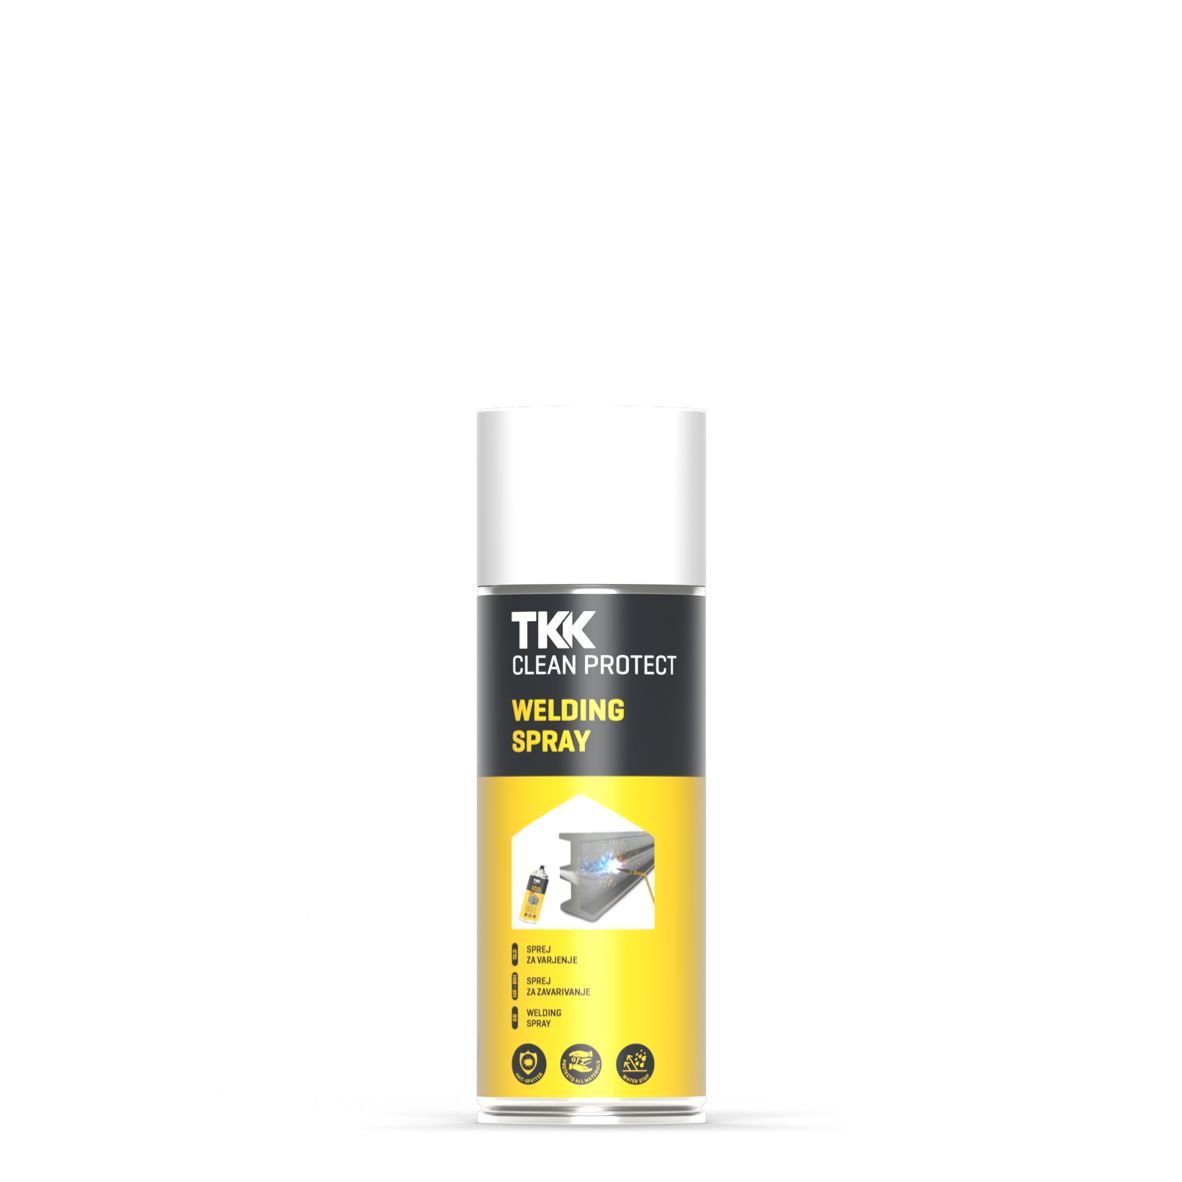 TKK Clean Protect Welding Spray